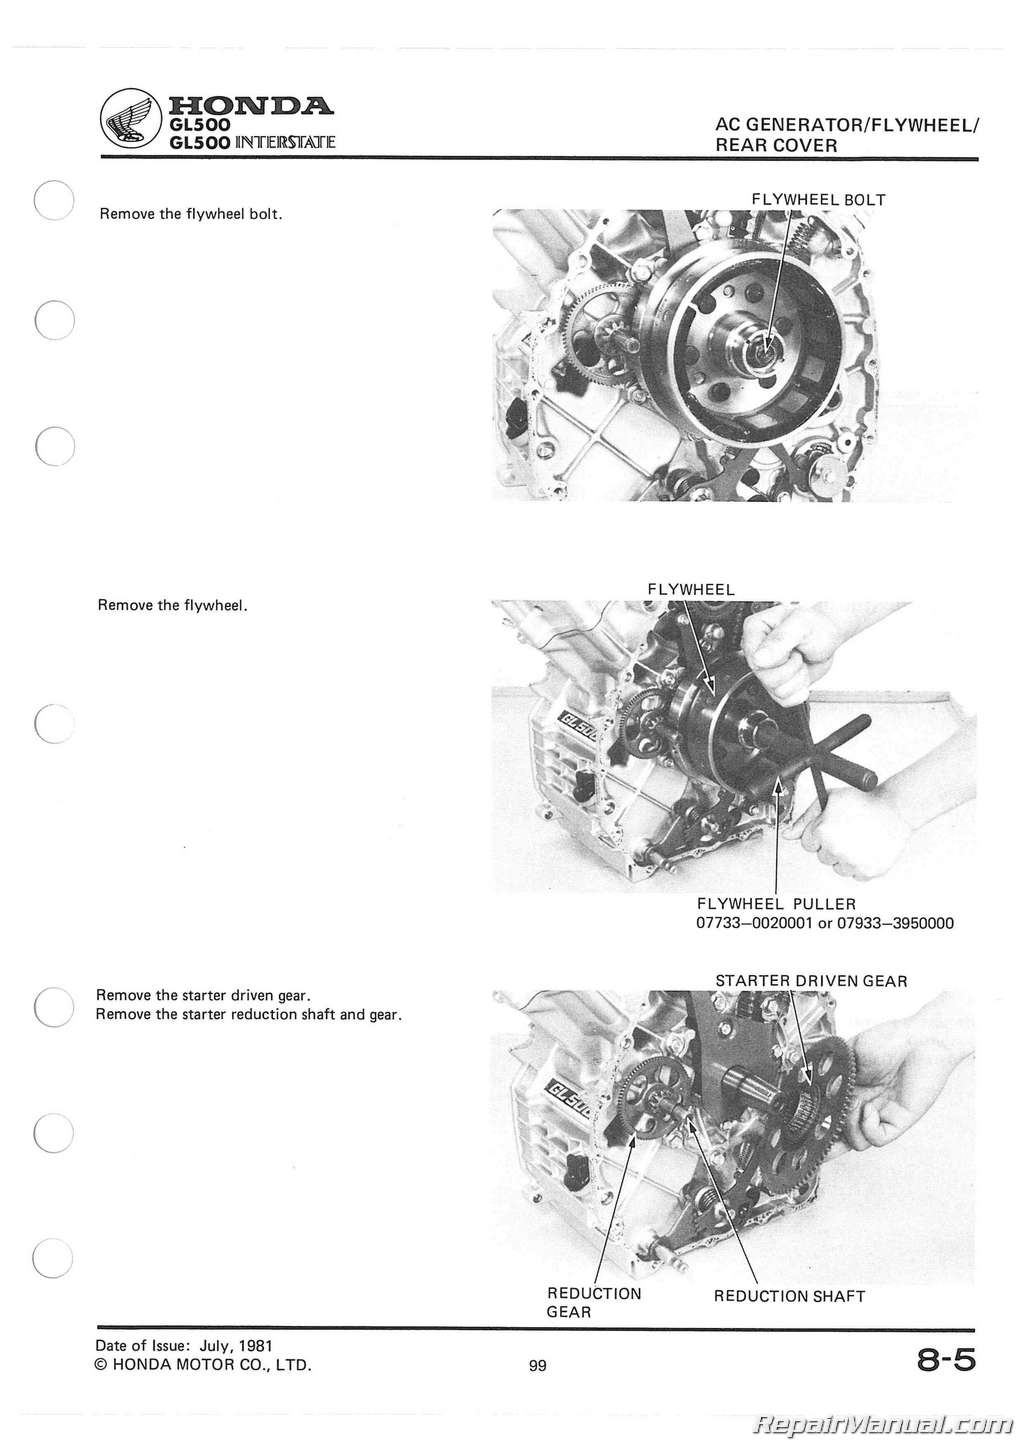 1982 Honda gl500 silverwing owners manual